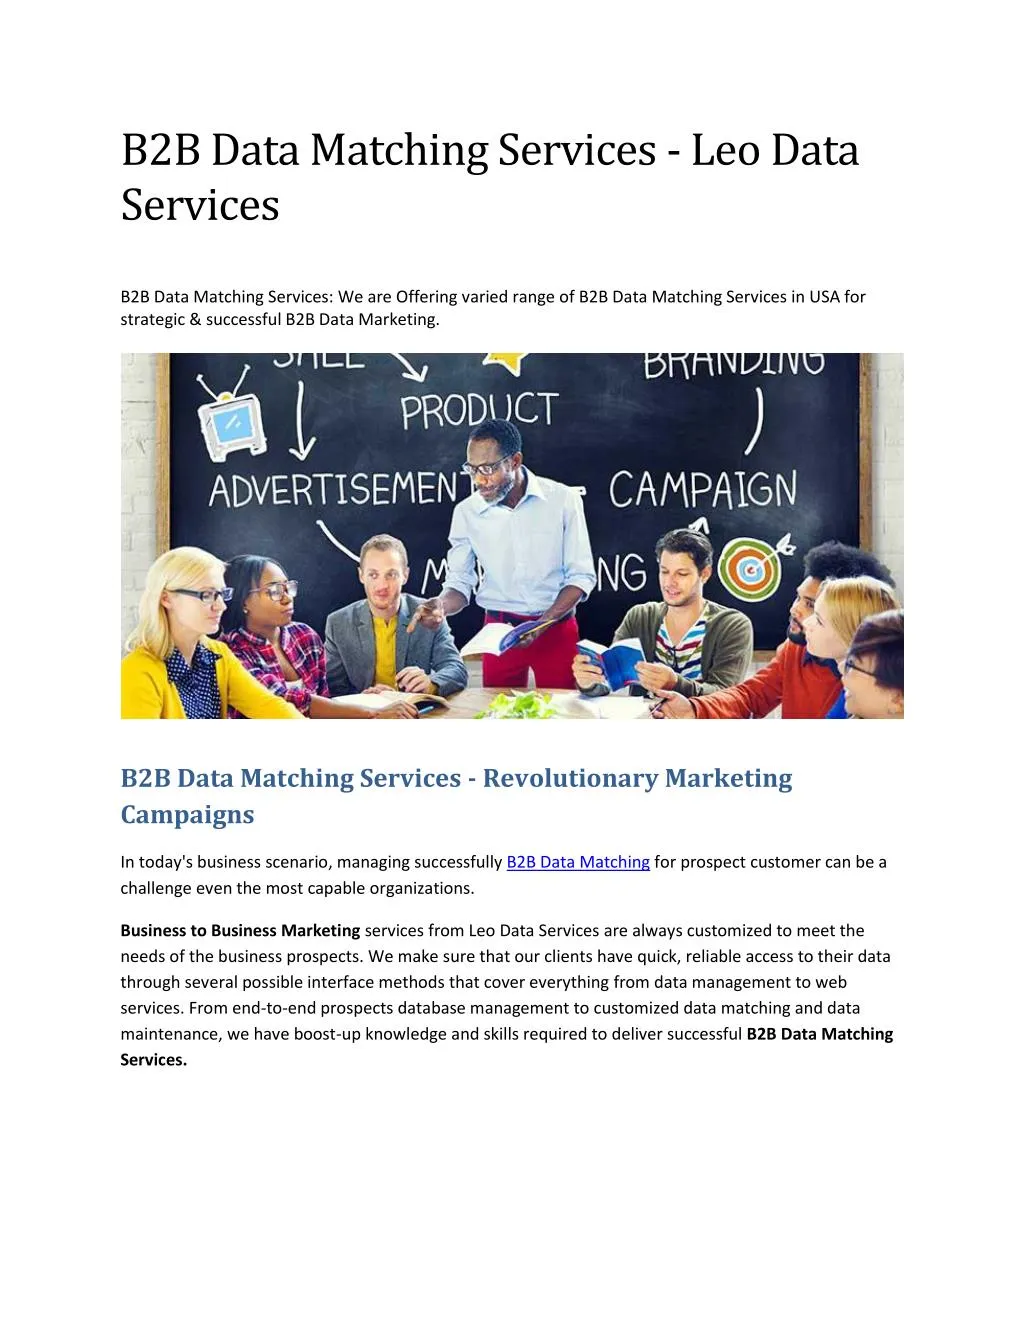 b2b data matching services leo data services